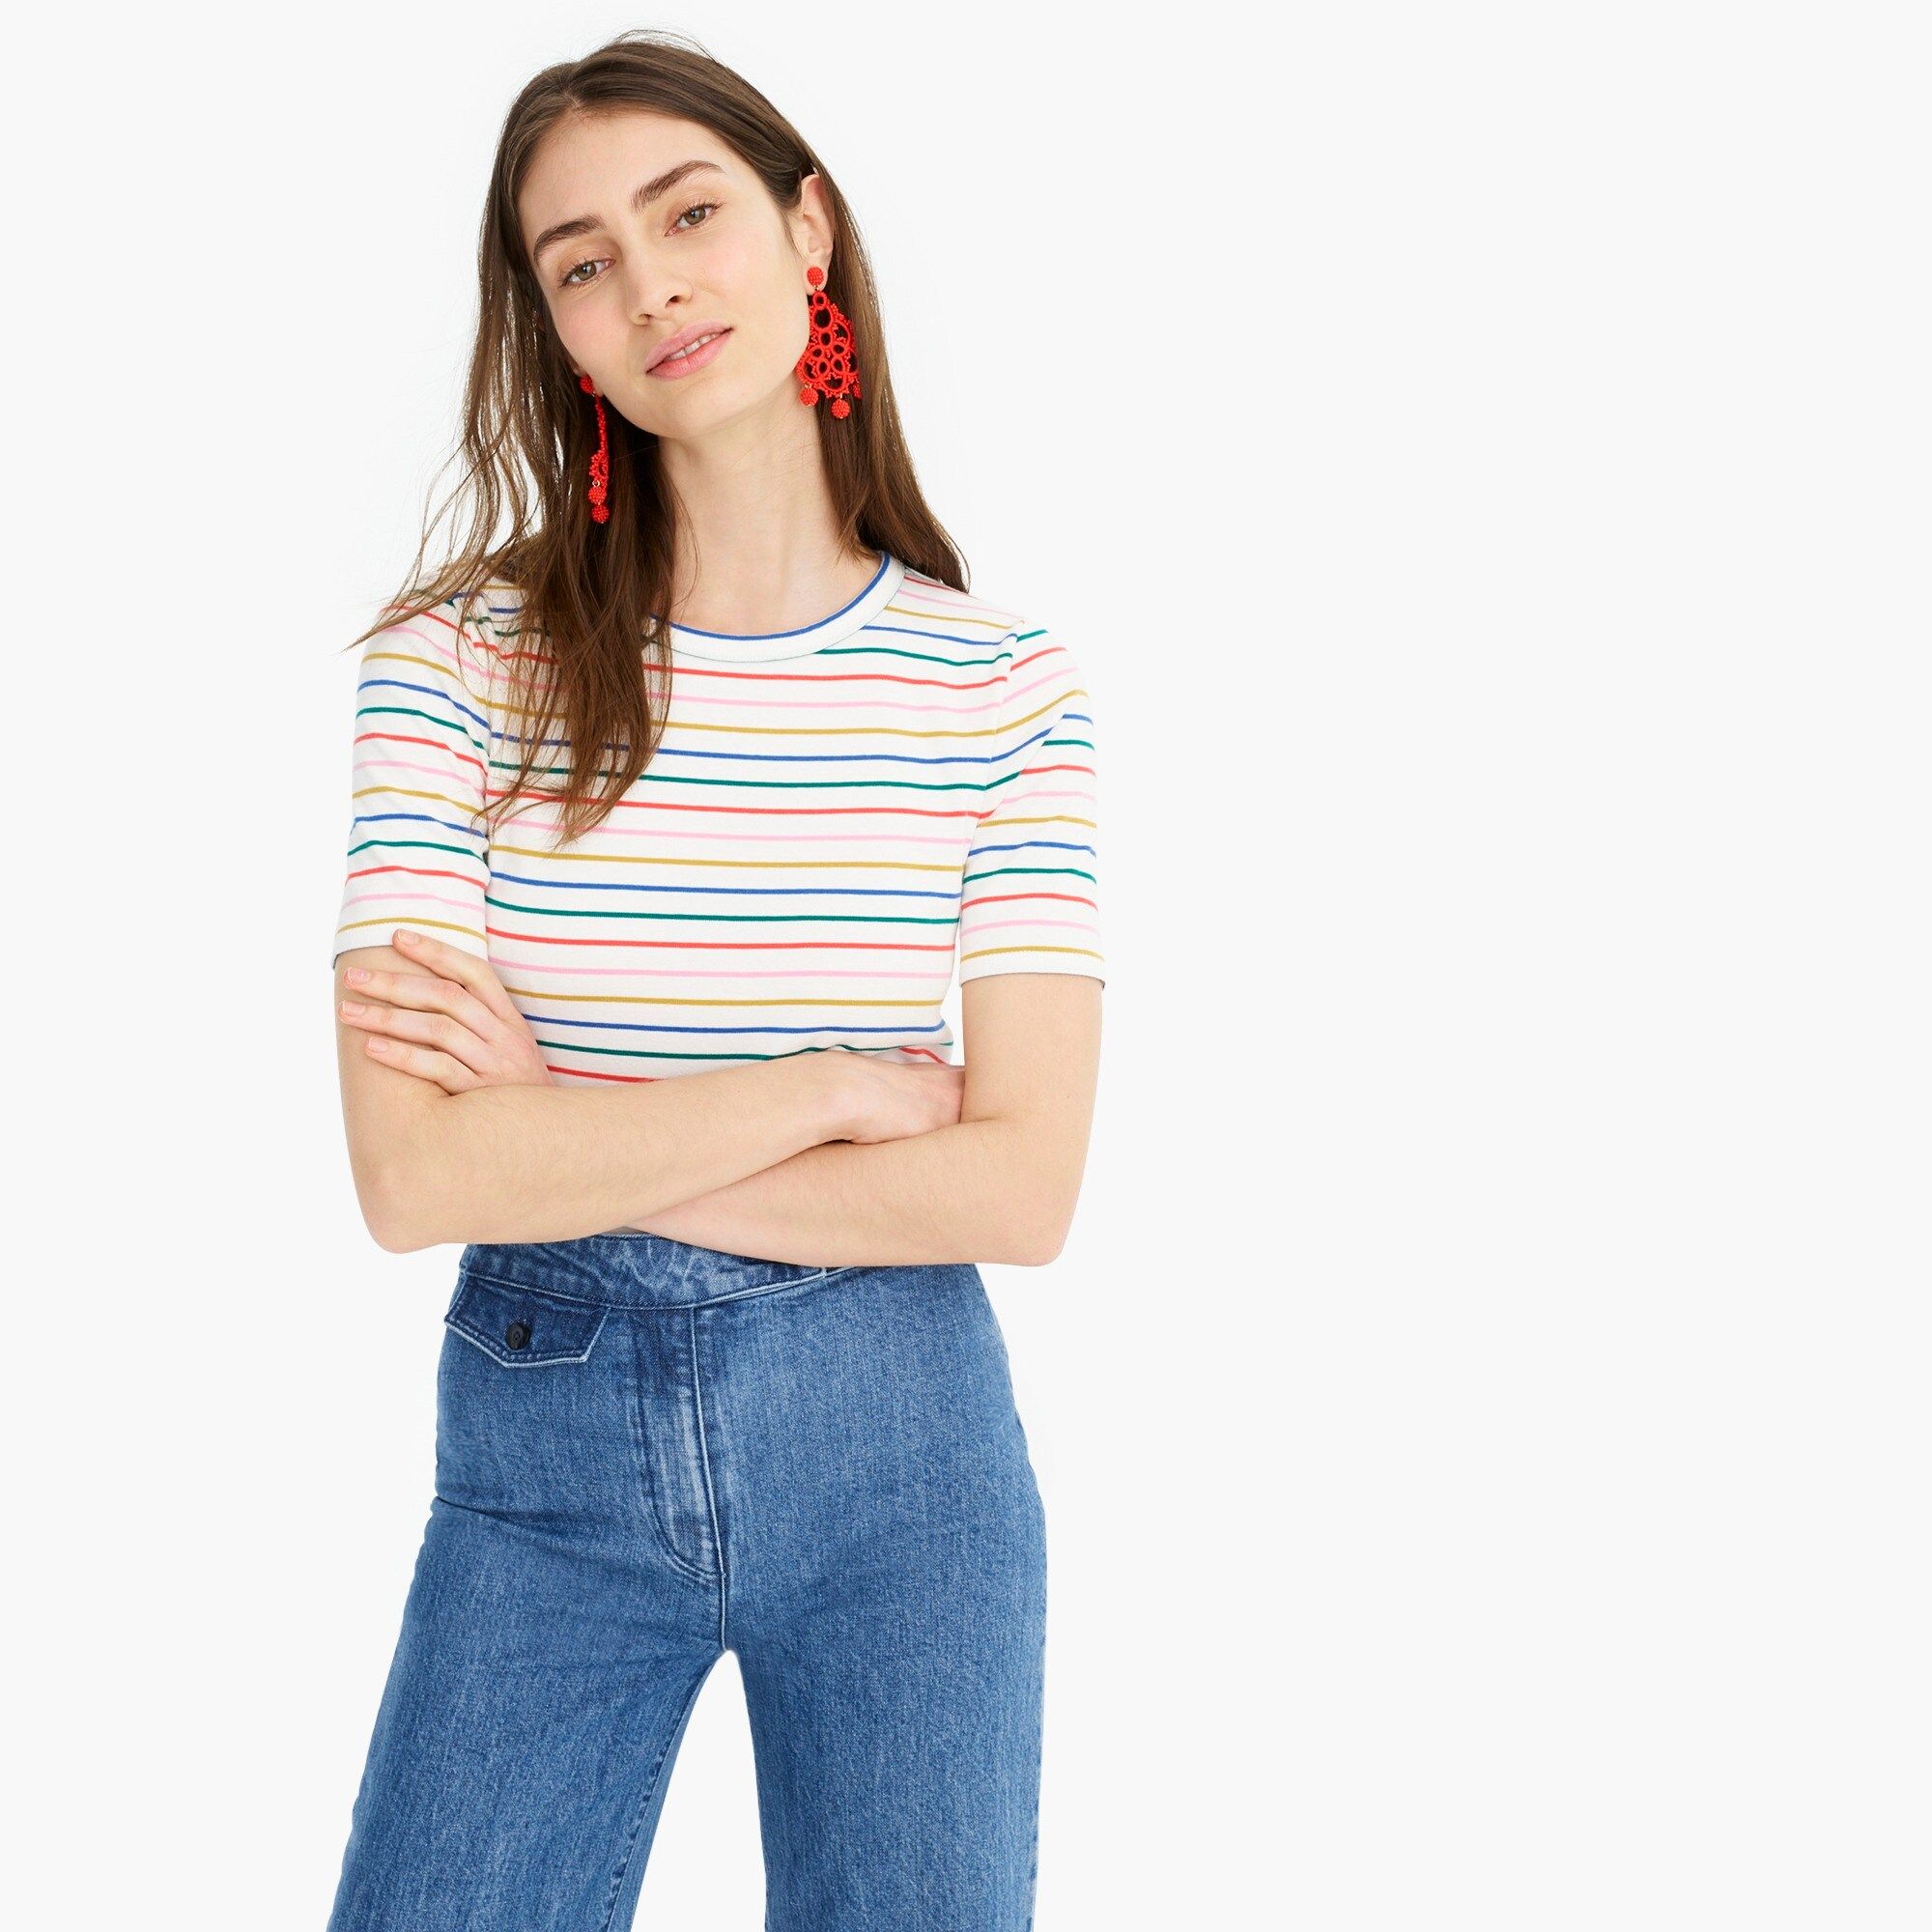 Slim perfect T-shirt in stripe | J.Crew US